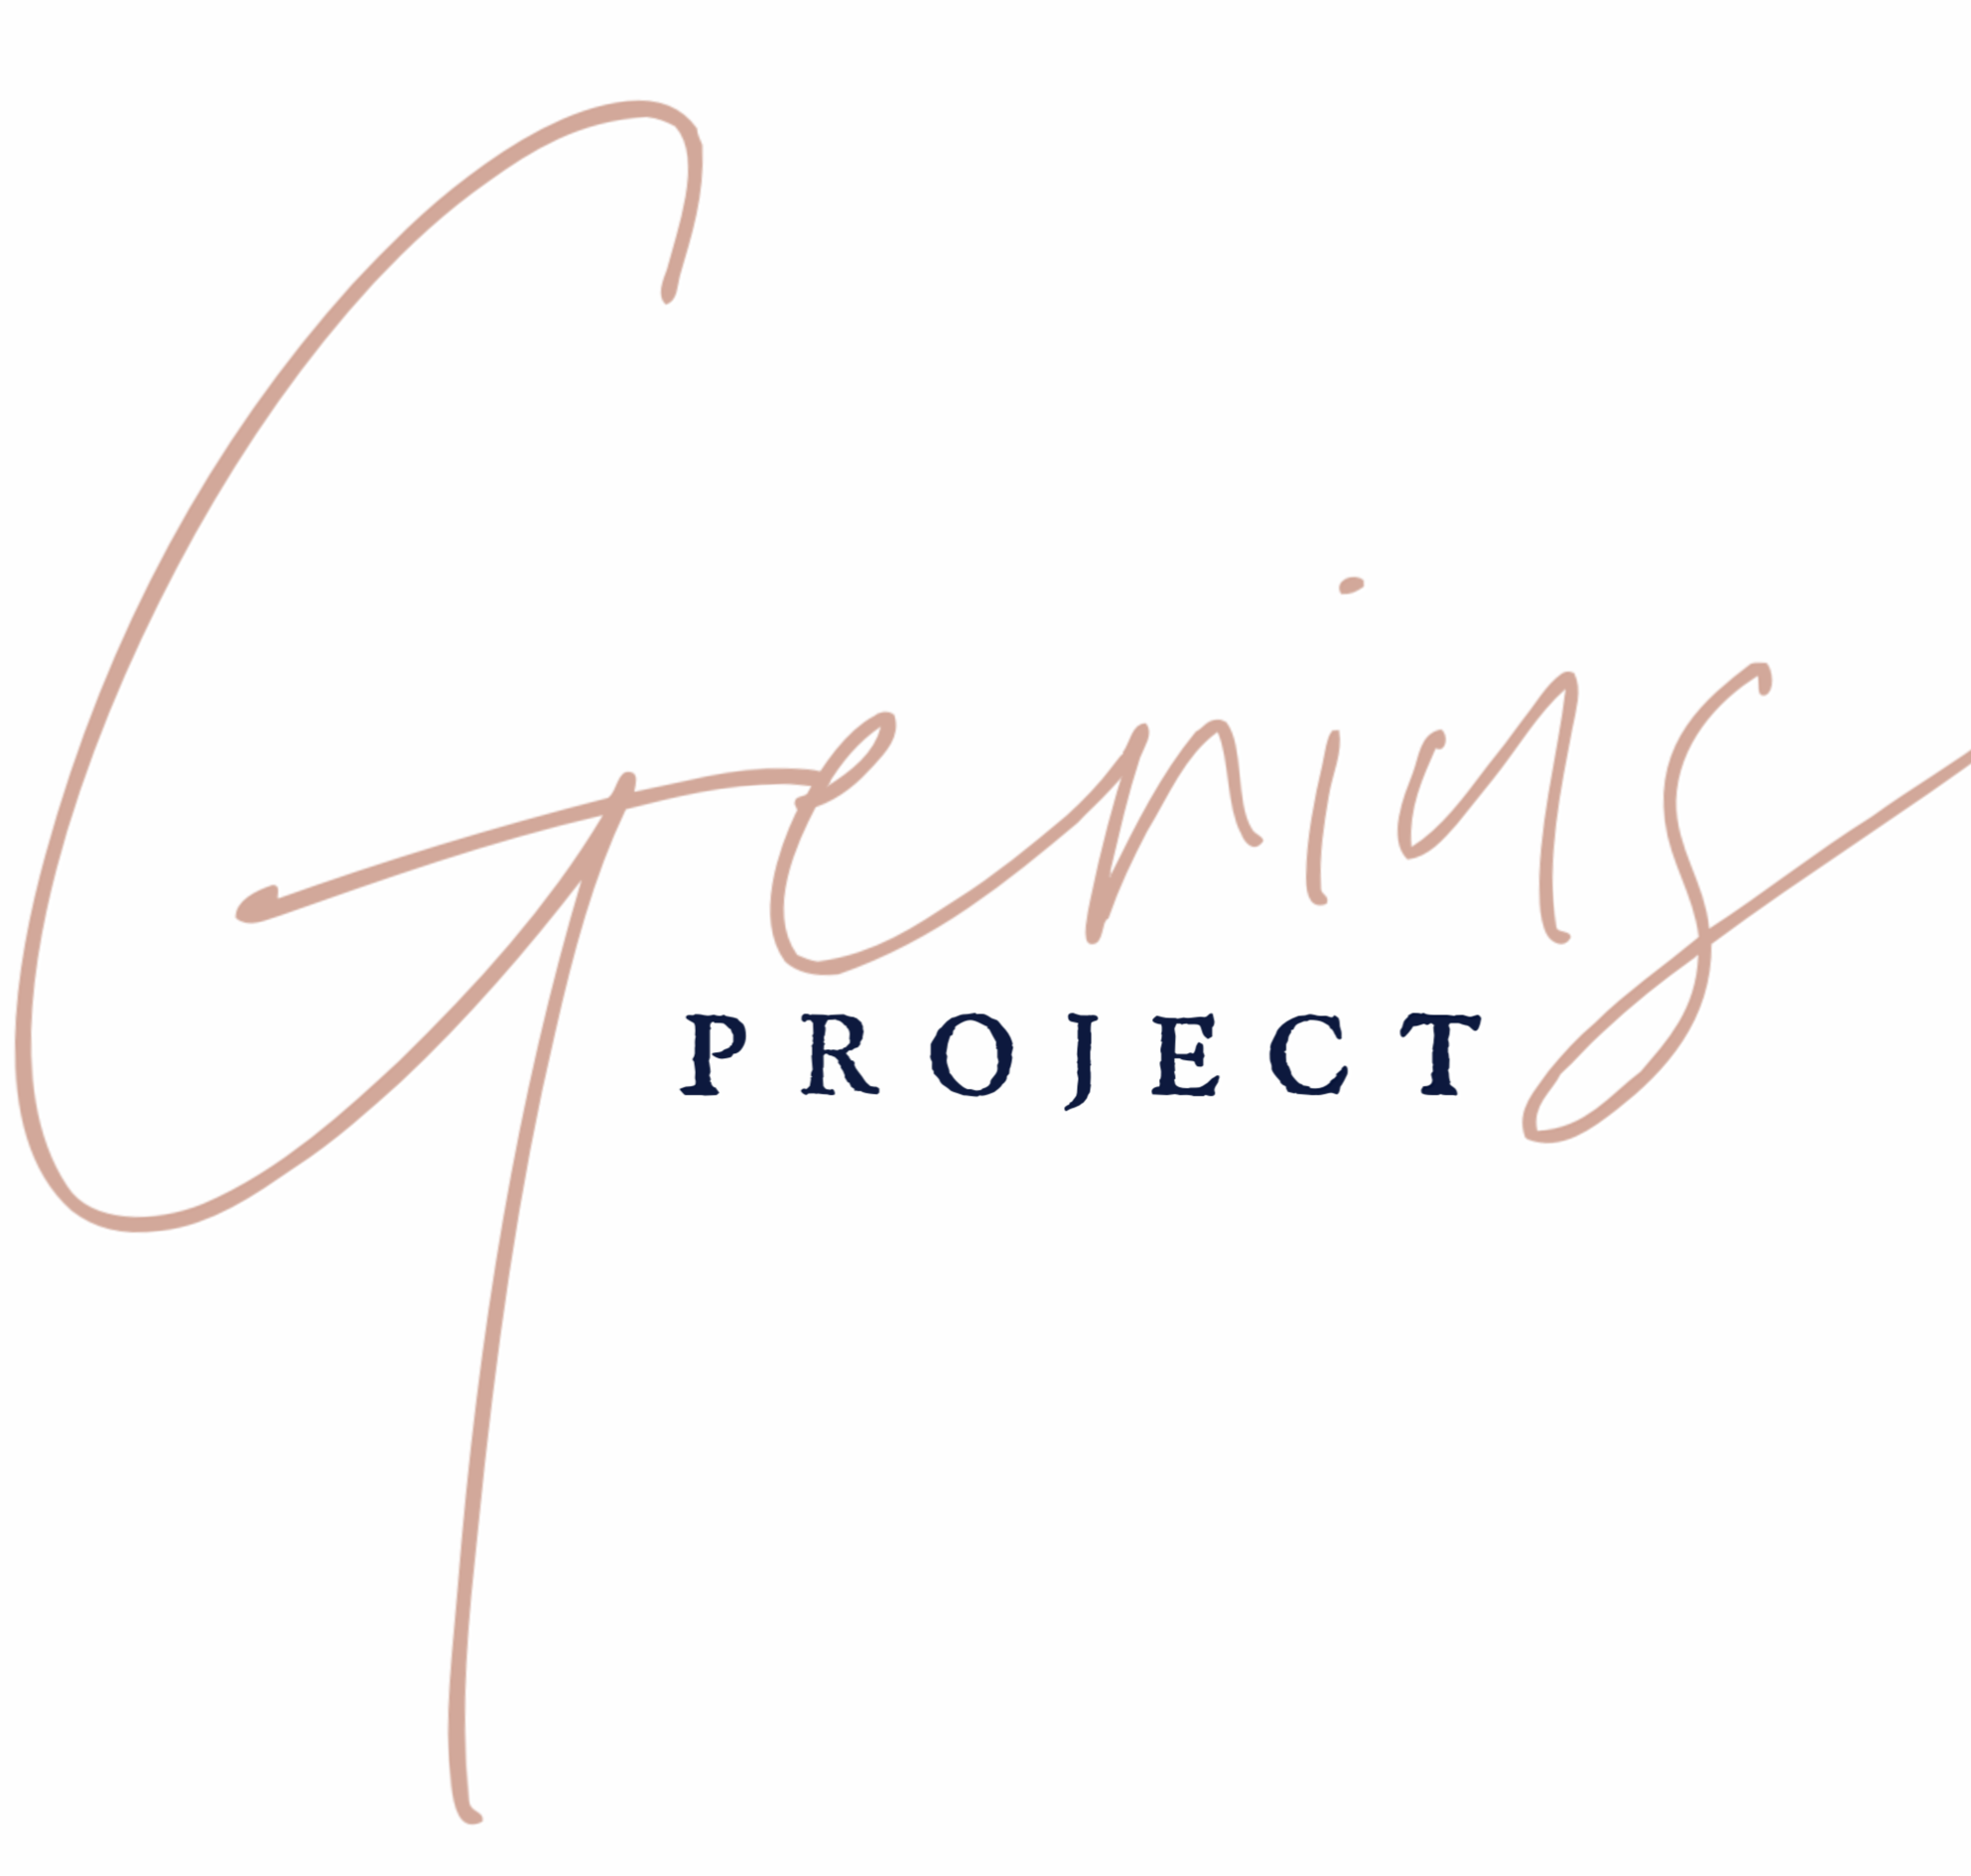 The Genius Project